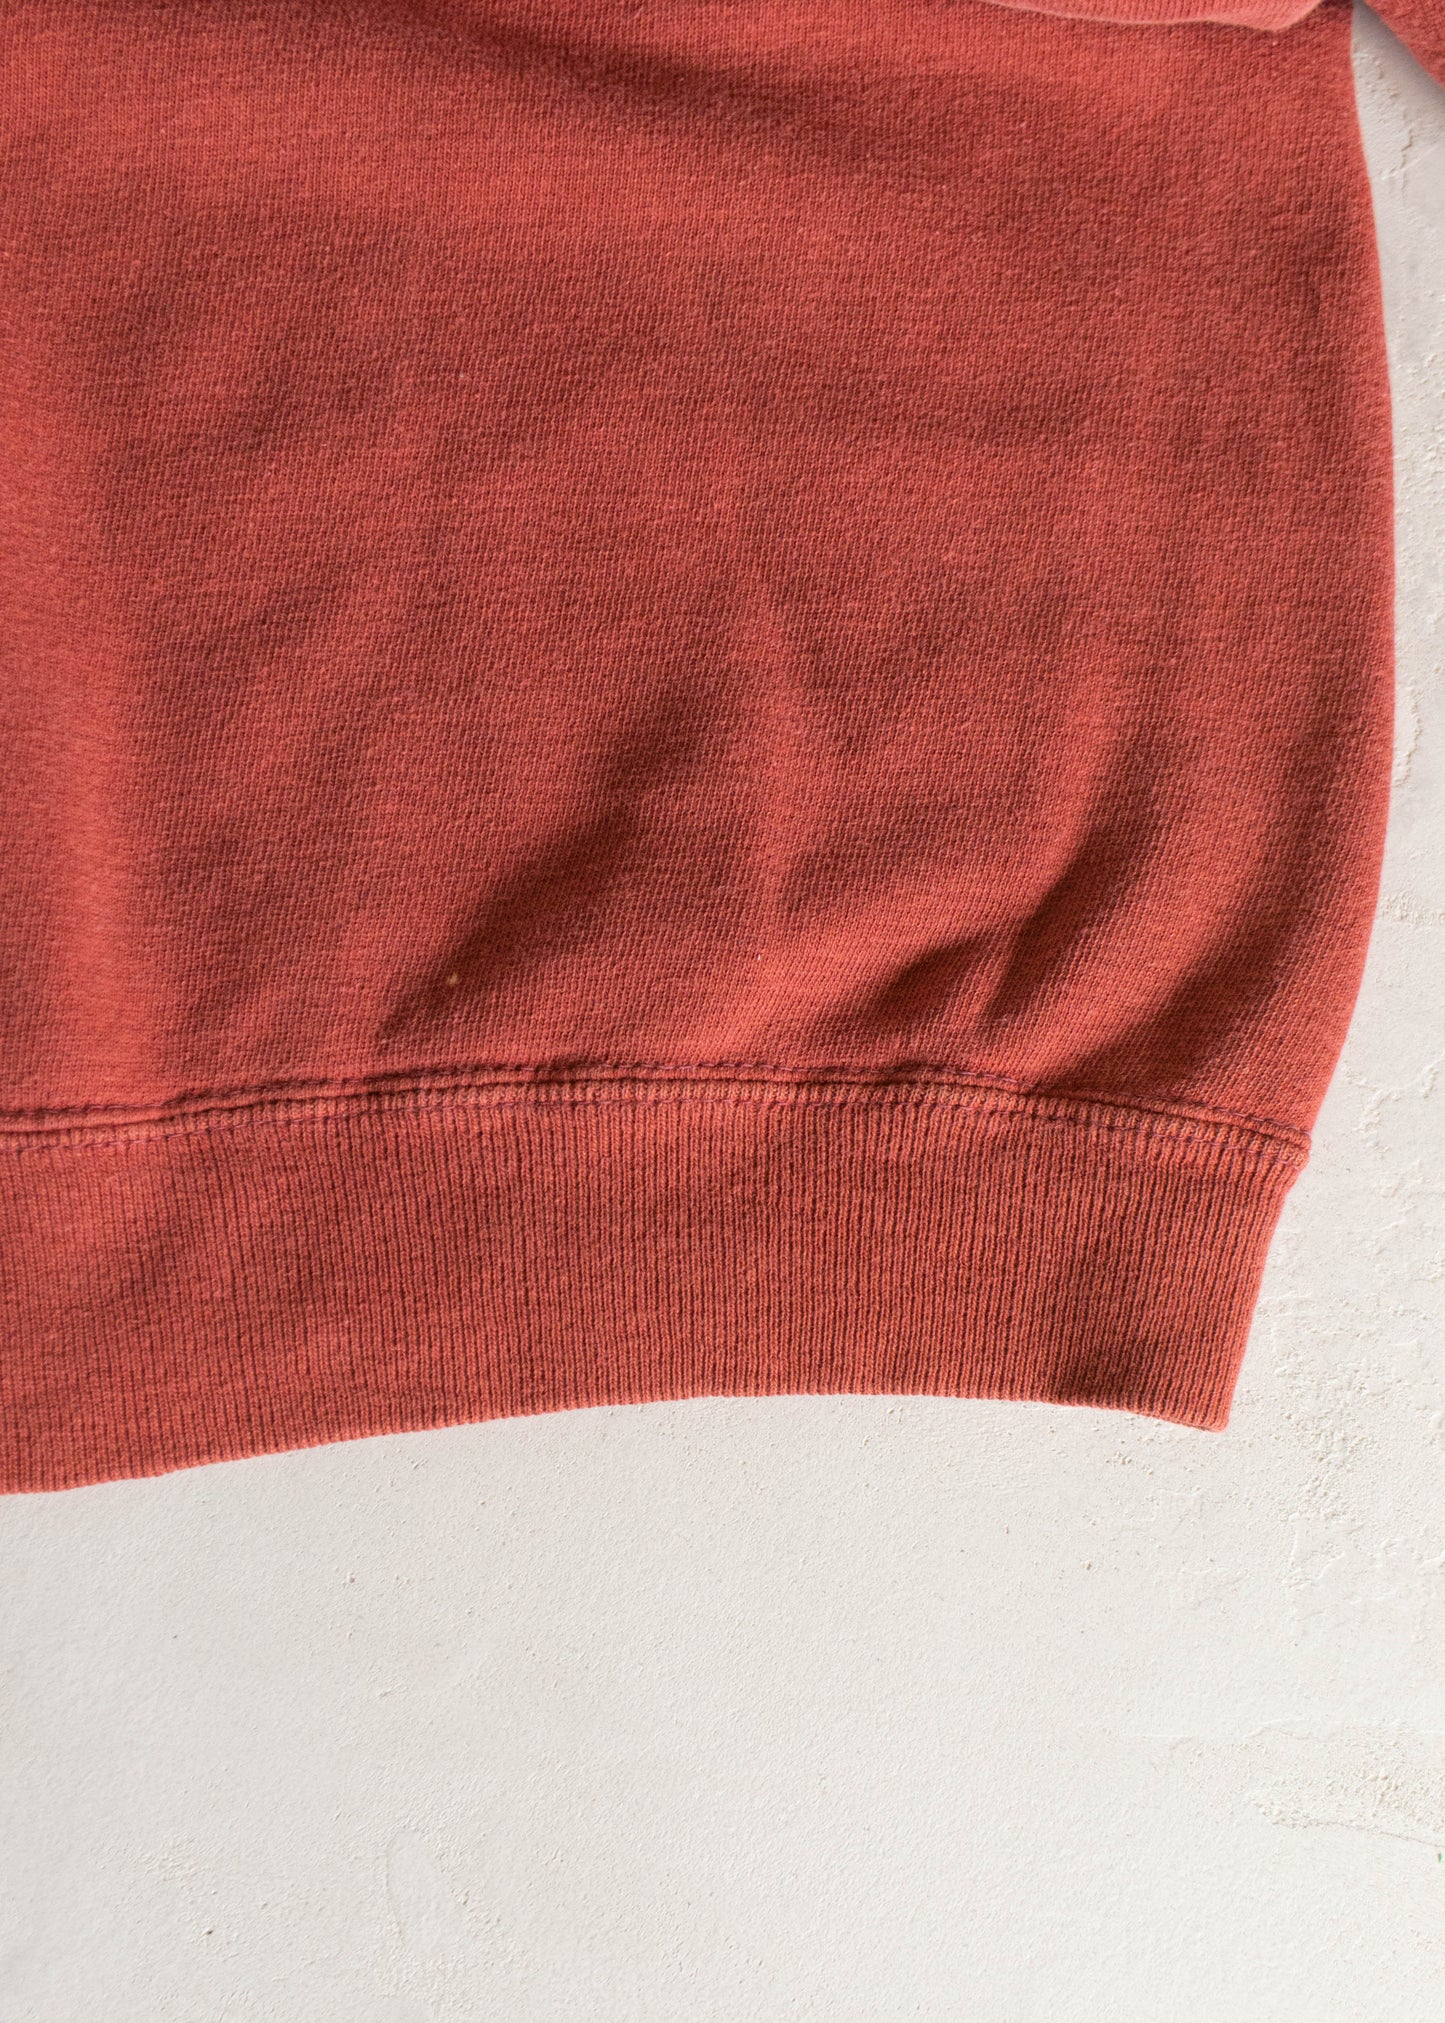 1970s Raglan Sweatshirt Size M/L